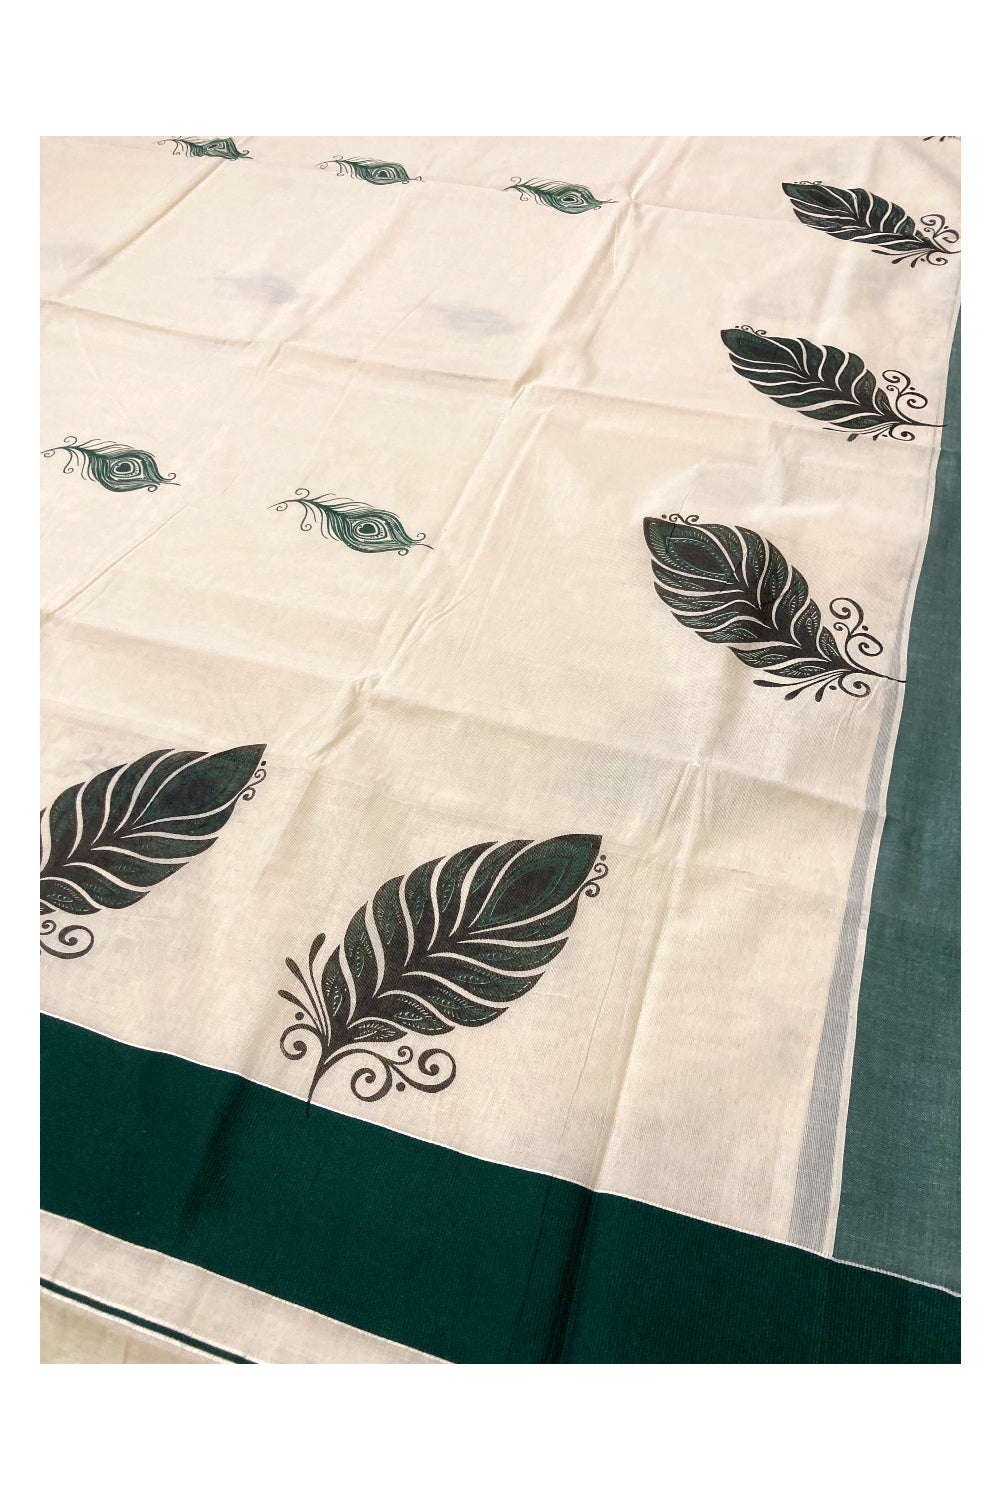 Pure Cotton Kerala Saree with Feather Block Printed Design and Dark Green Border